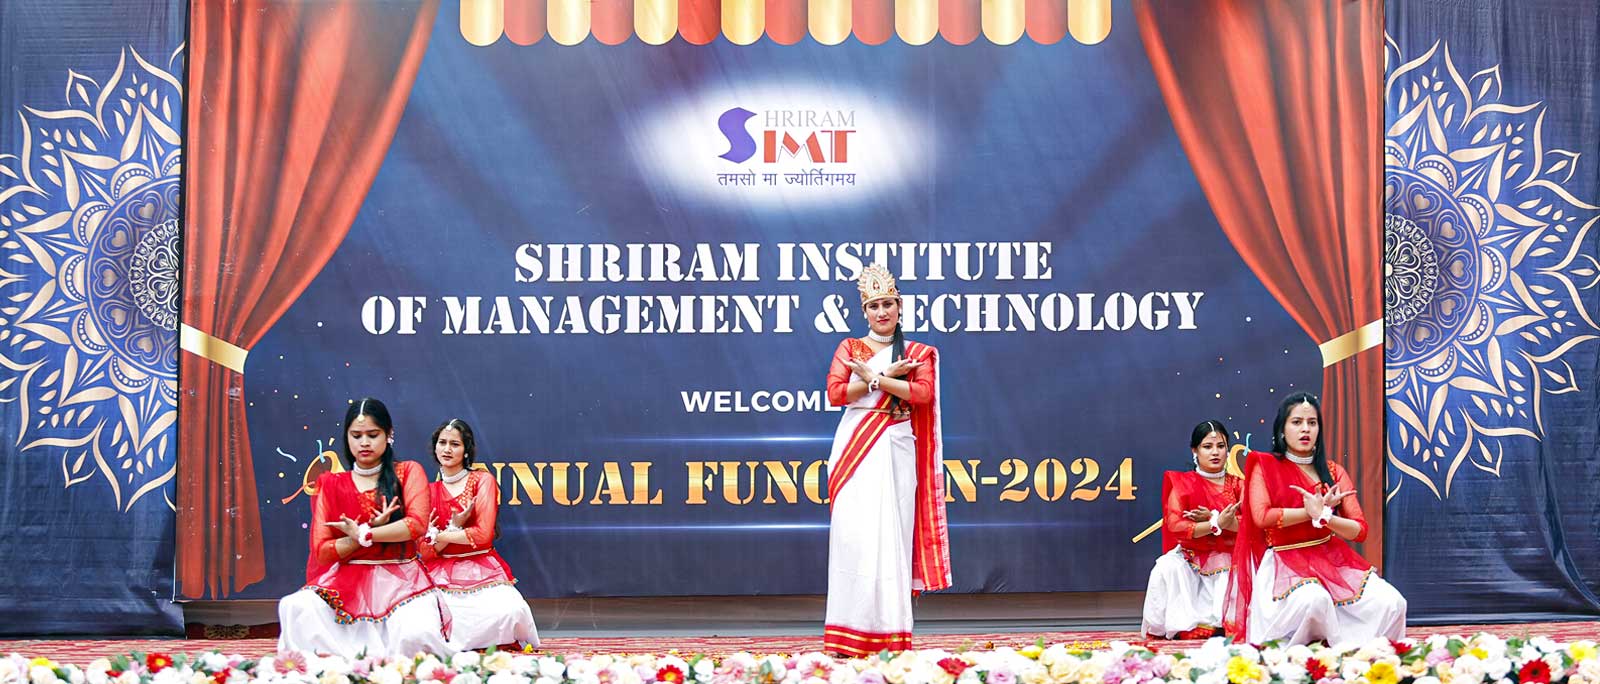 Cultural Program at Shriram Institute of Management & technology